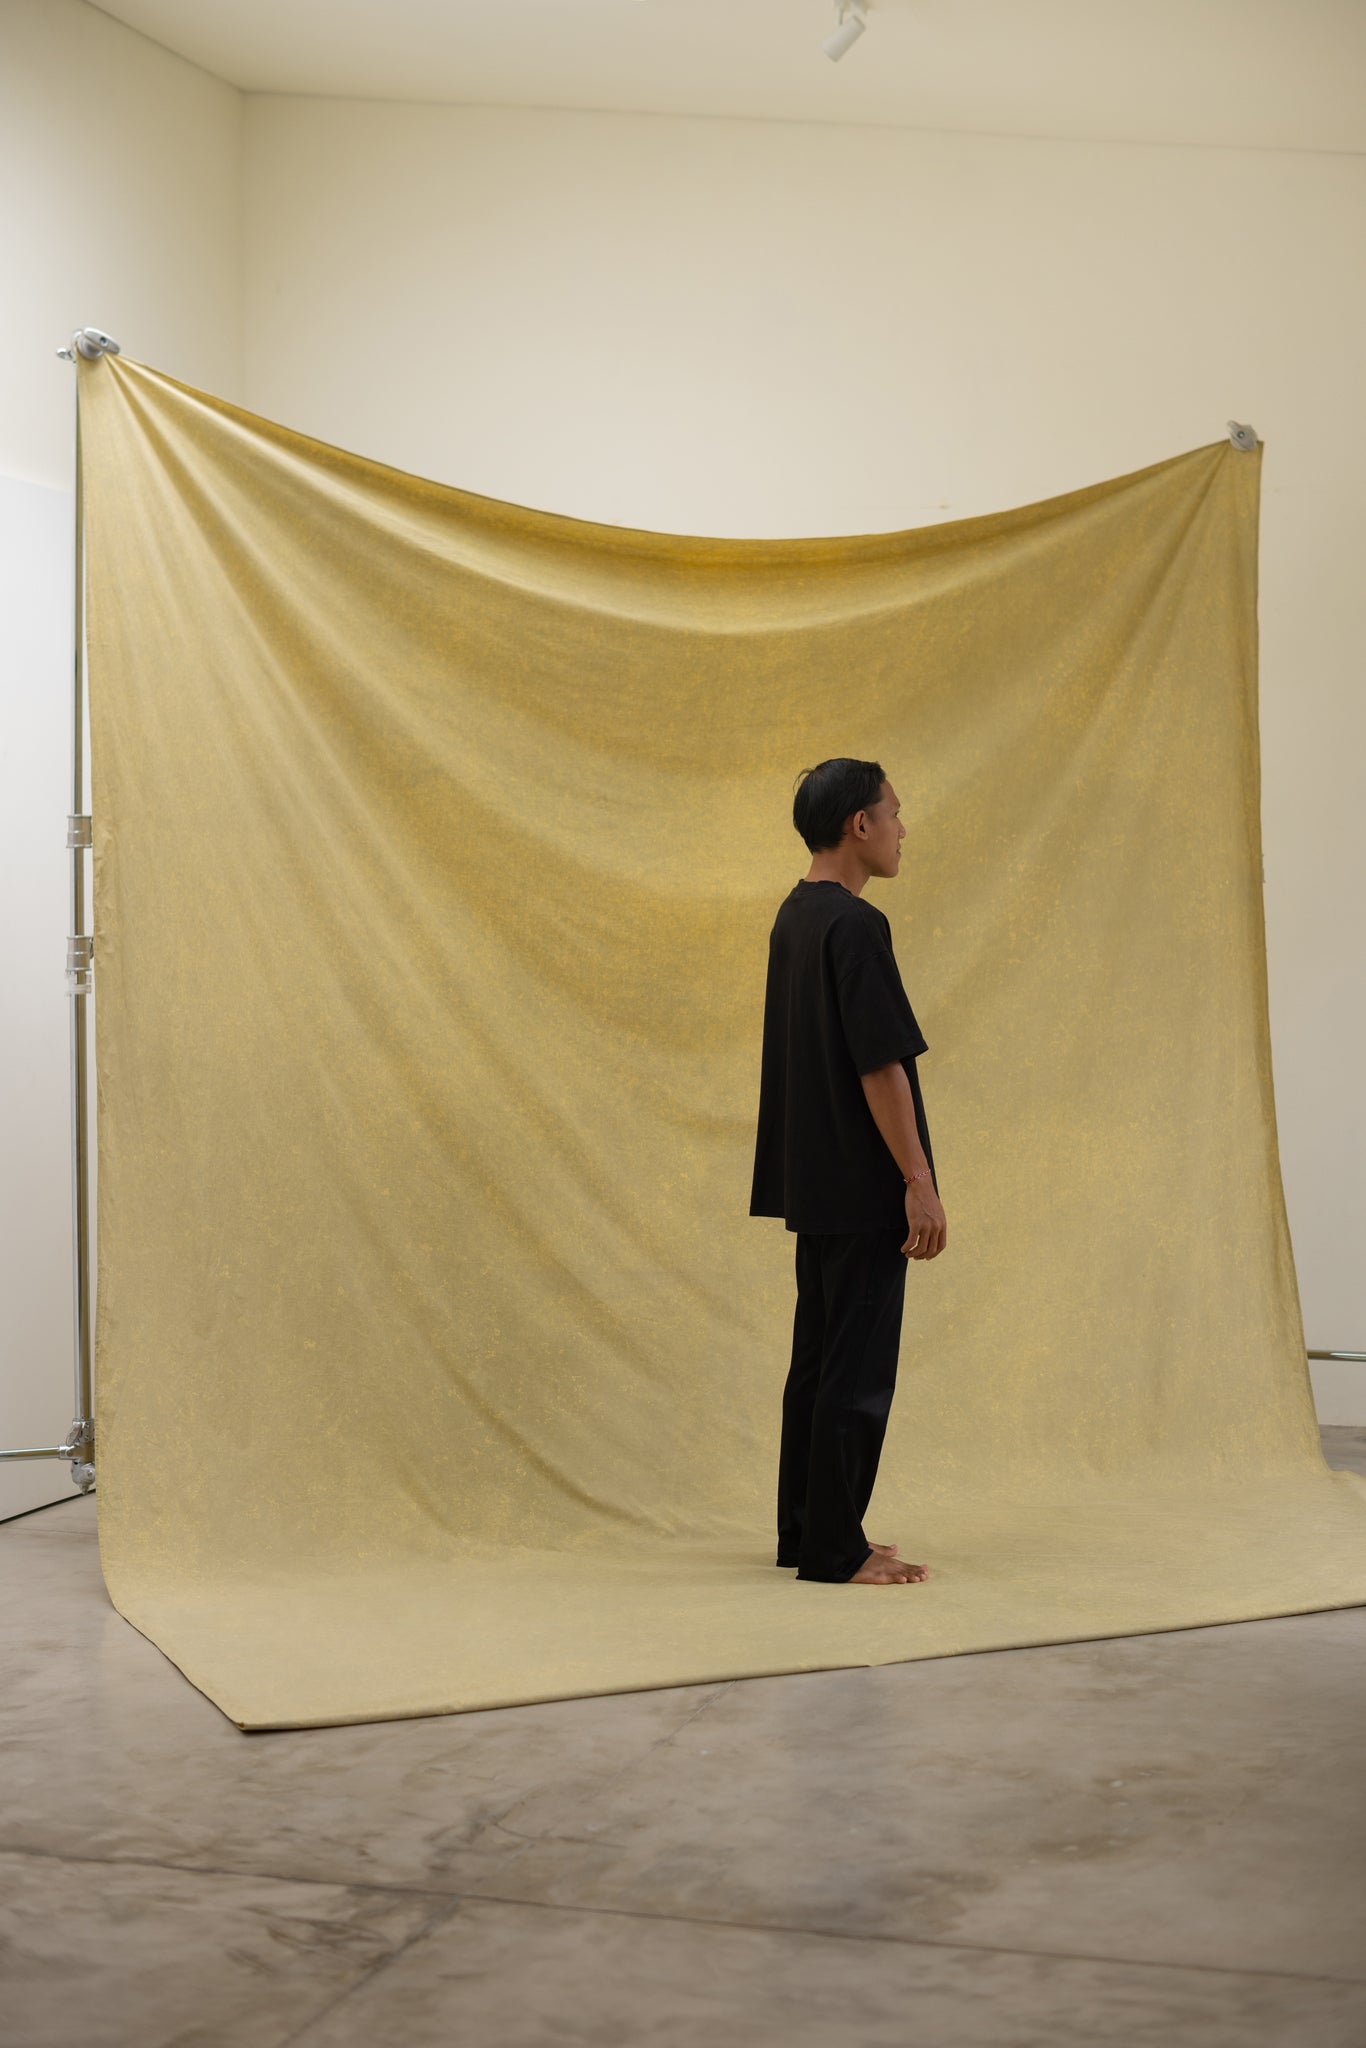 [3x3m] Cotton Backdrop Sulphur Yellow